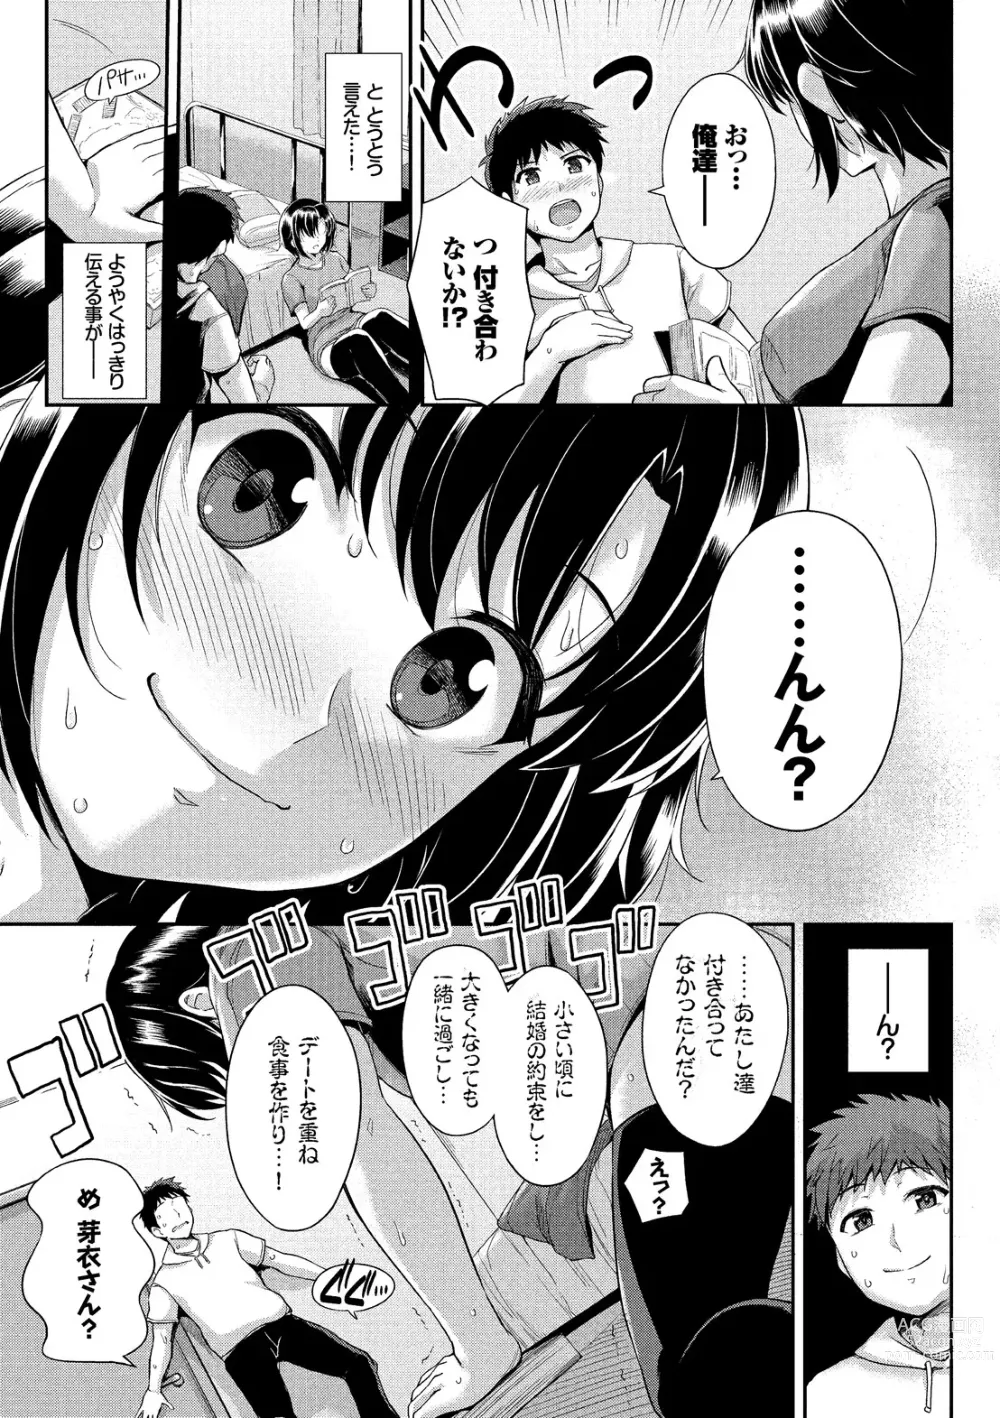 Page 9 of manga Hatsukoi Chocolat - first love chocolate